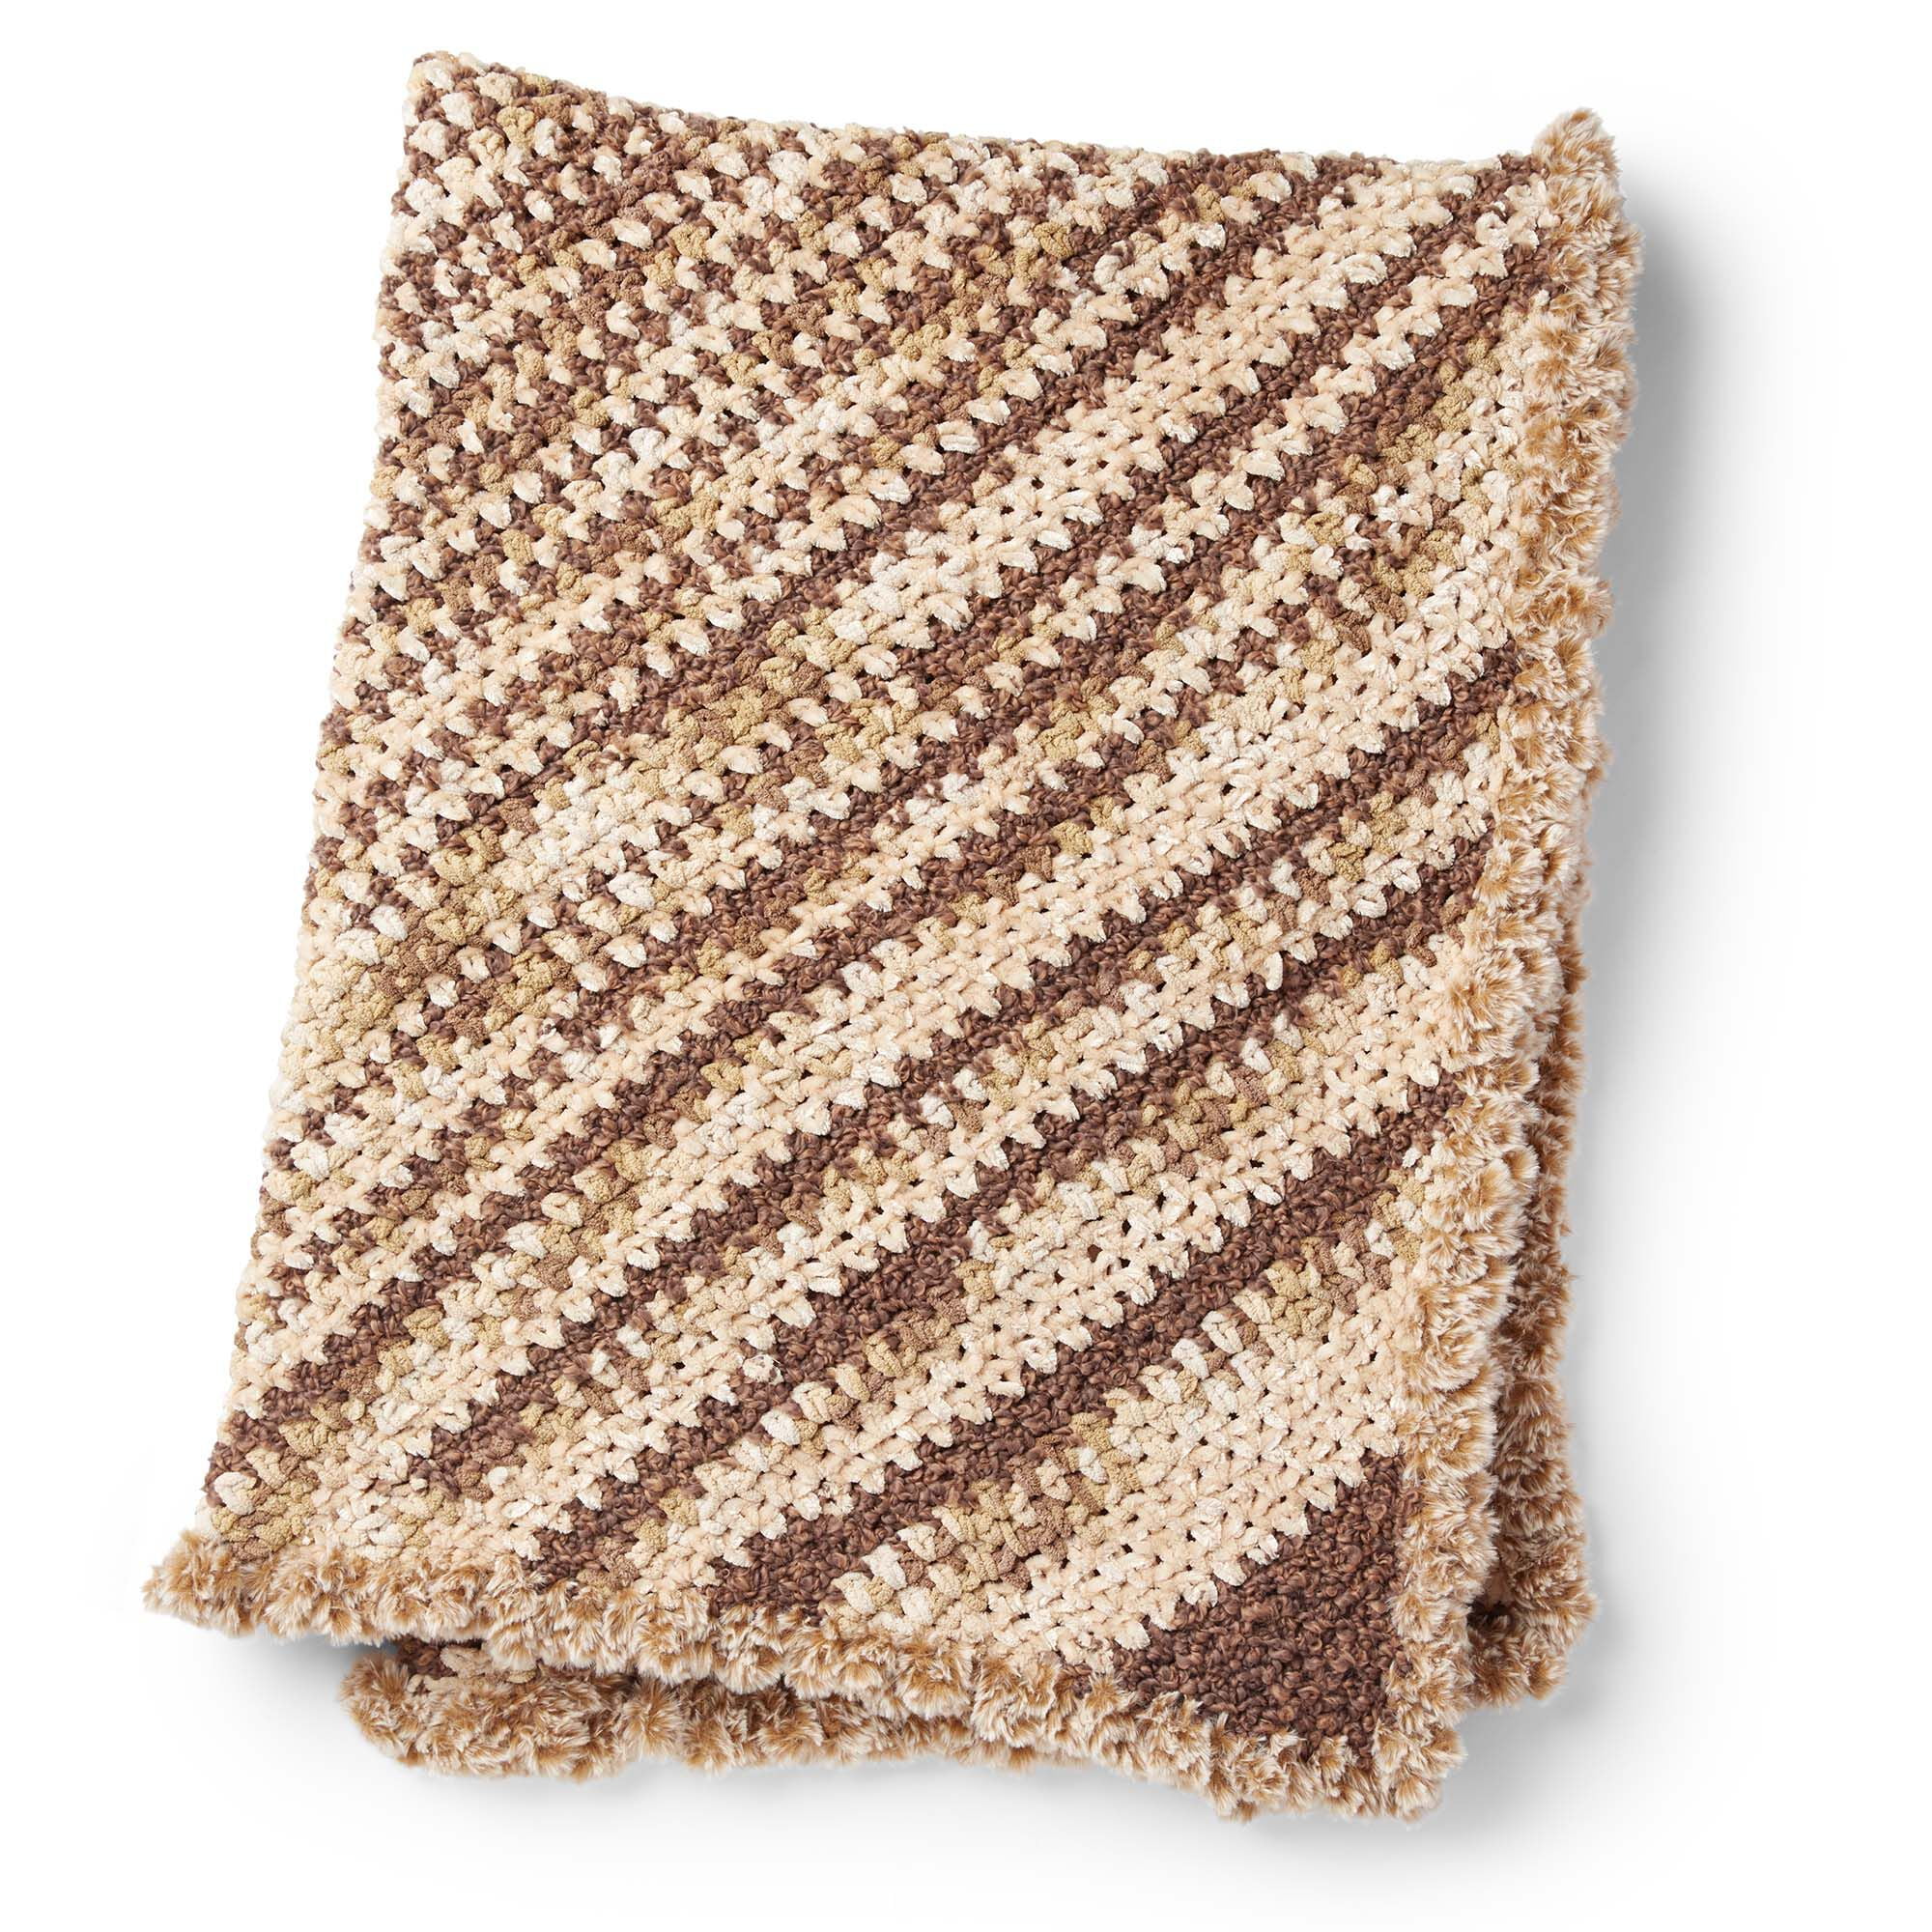  Bristlegrass Tan Yarn, Soft Acrylic Crochet Sweater